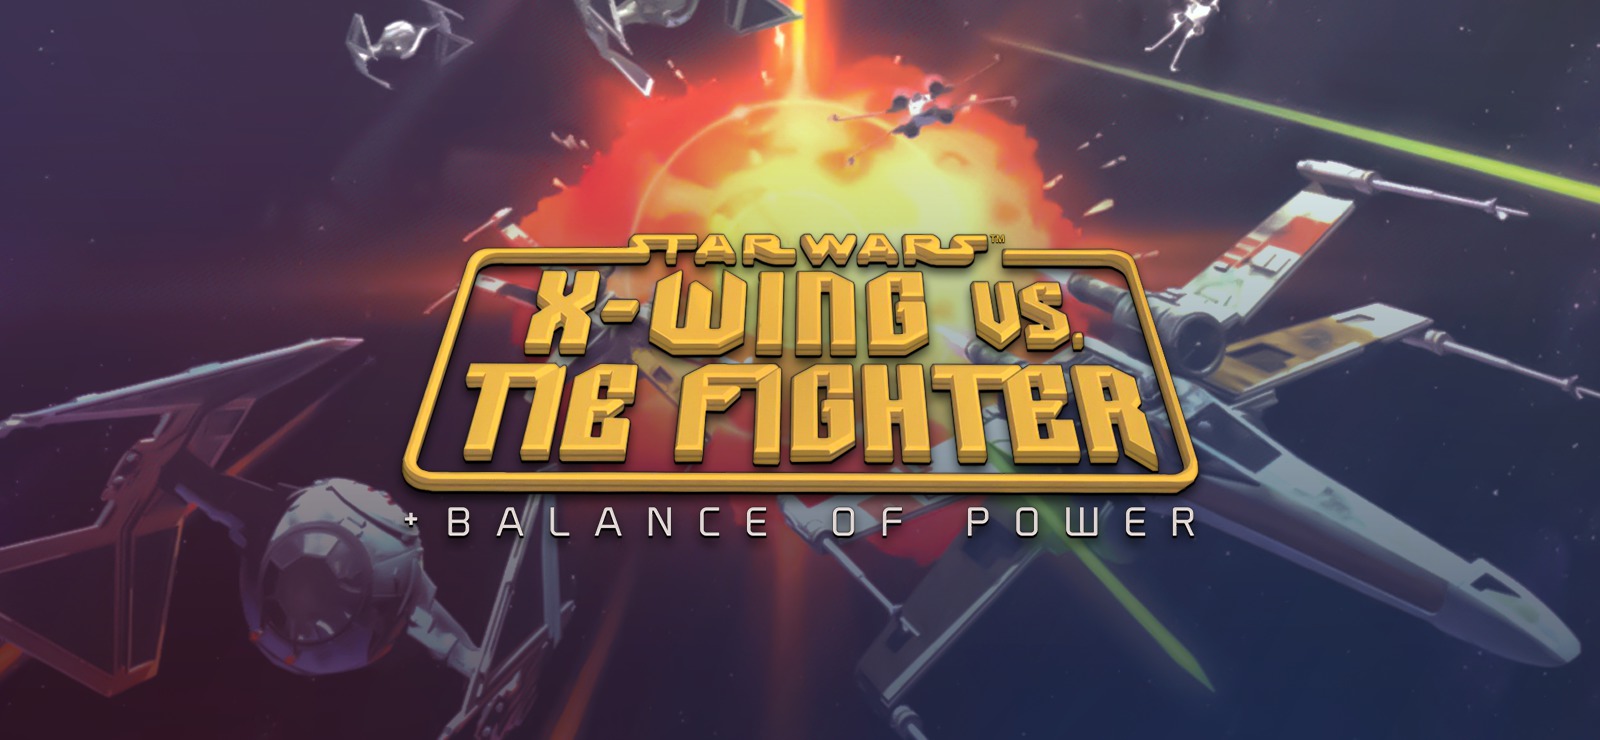 Star Wars: X-Wing Vs. TIE Fighter #15